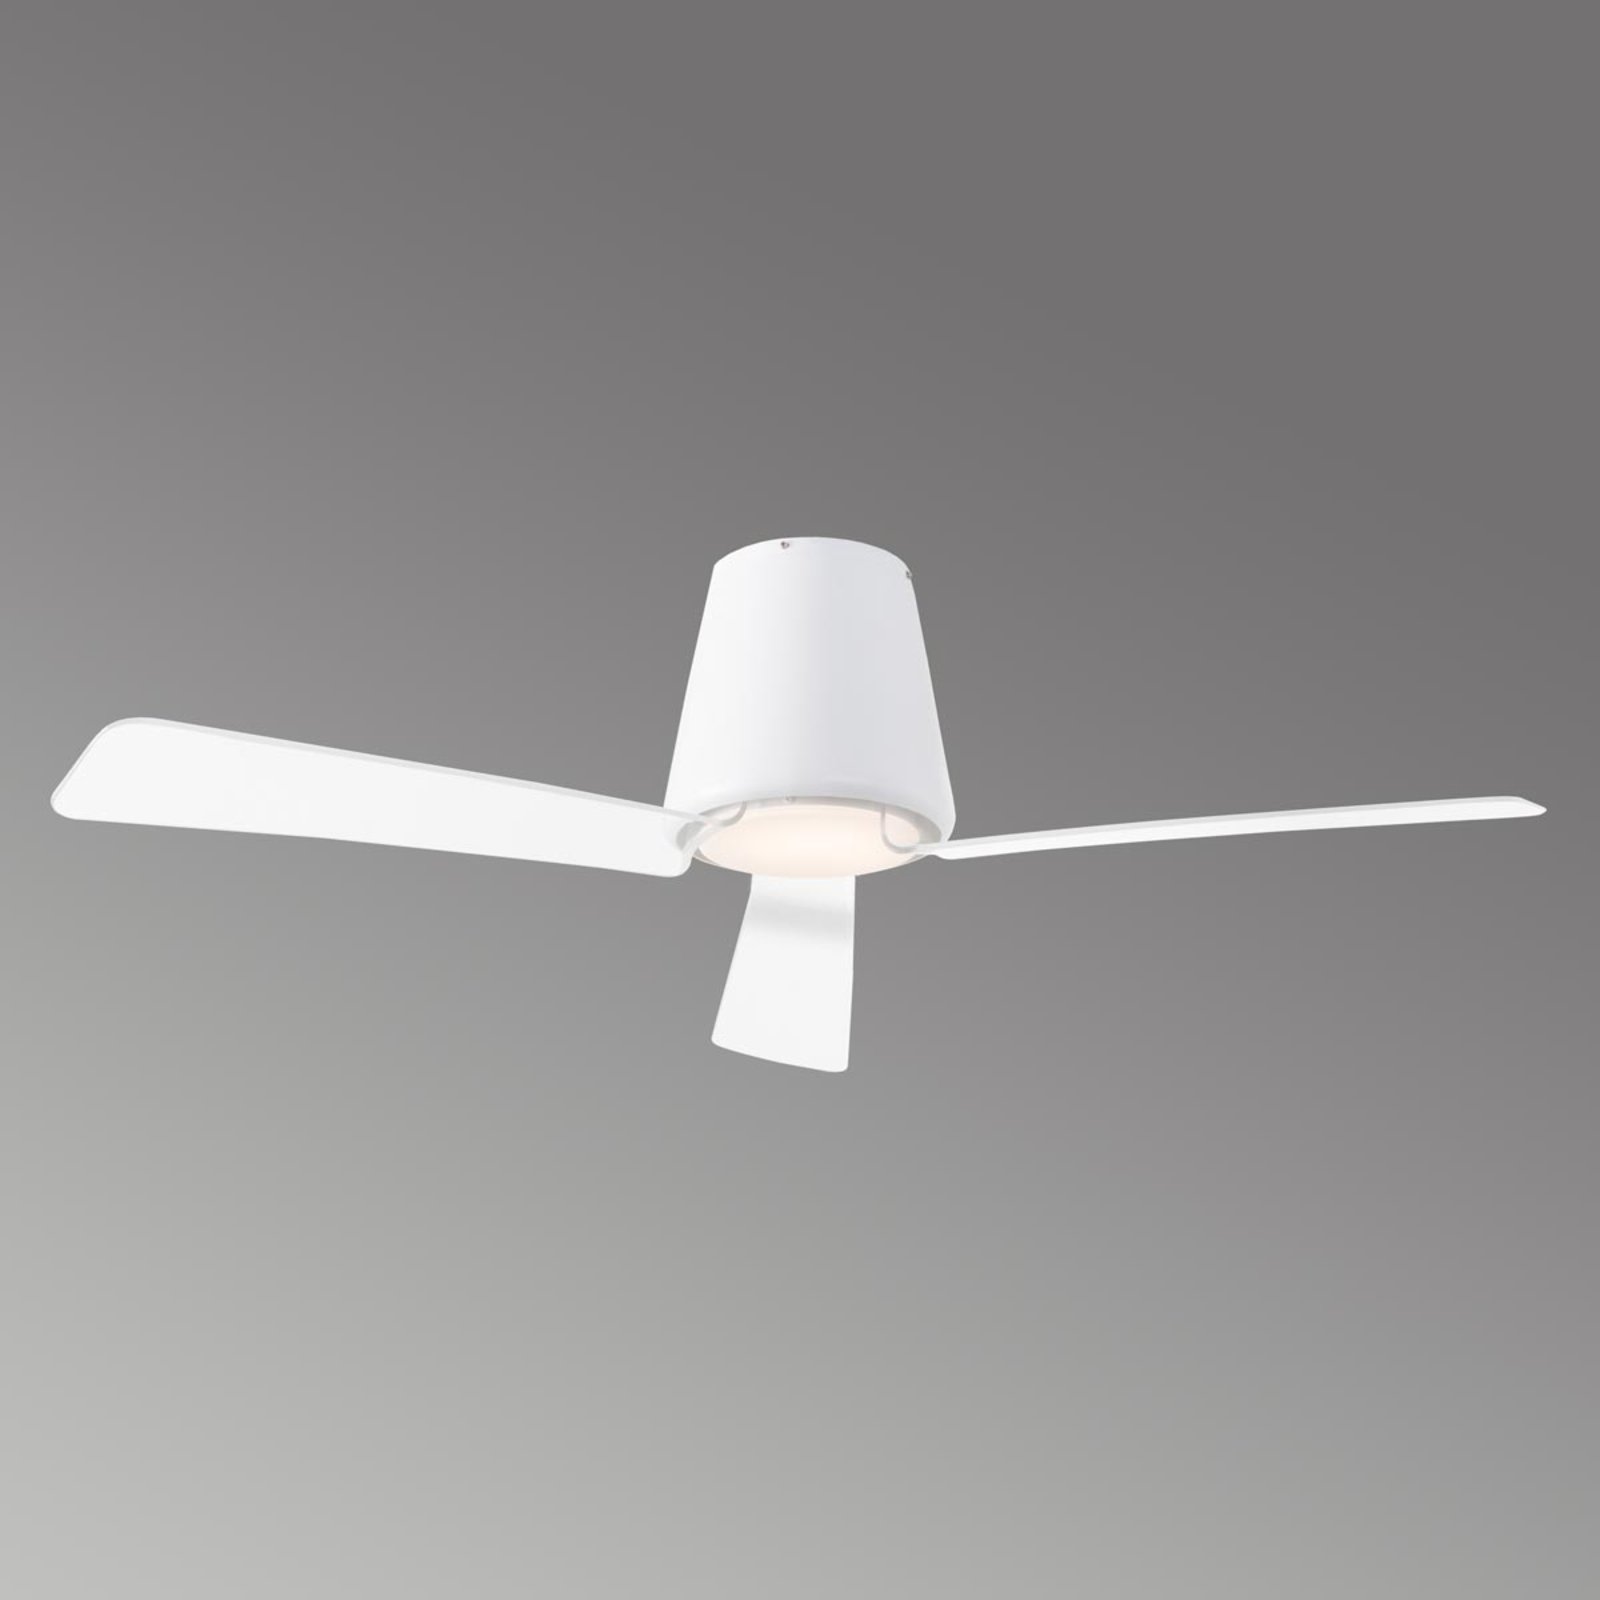 Timeless Garbí ceiling fan with LED light